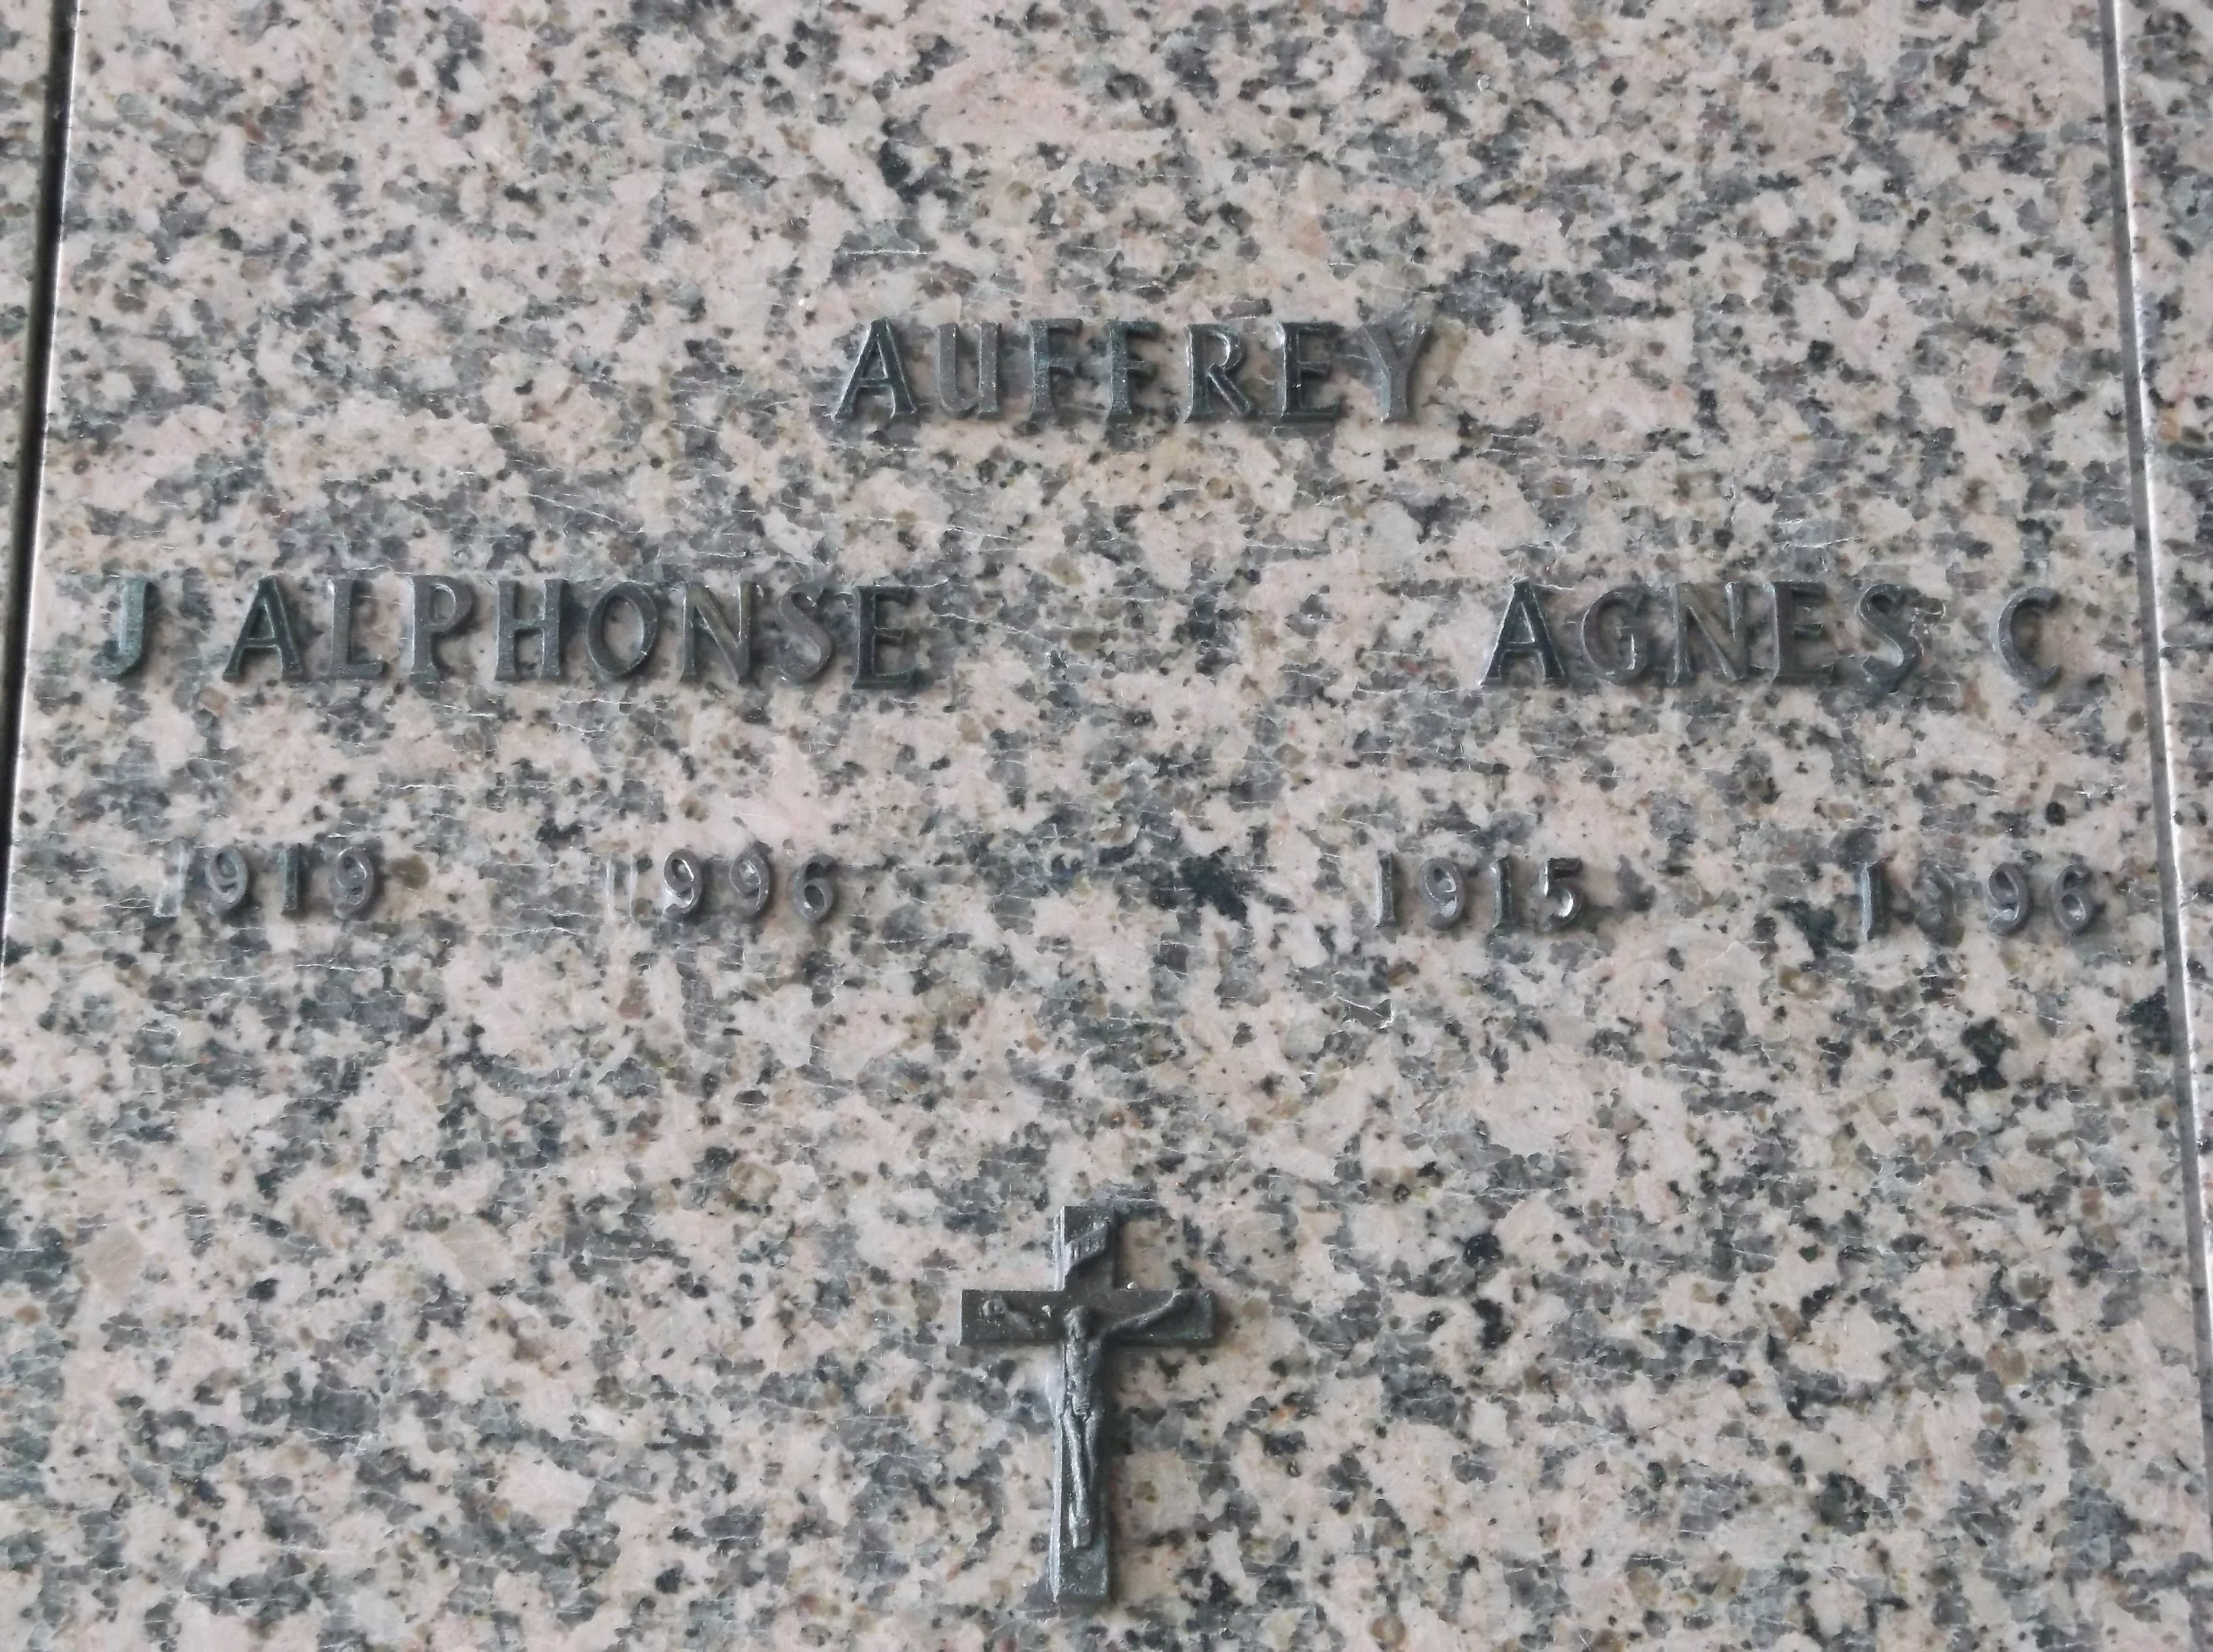 J Alphonse Auffrey